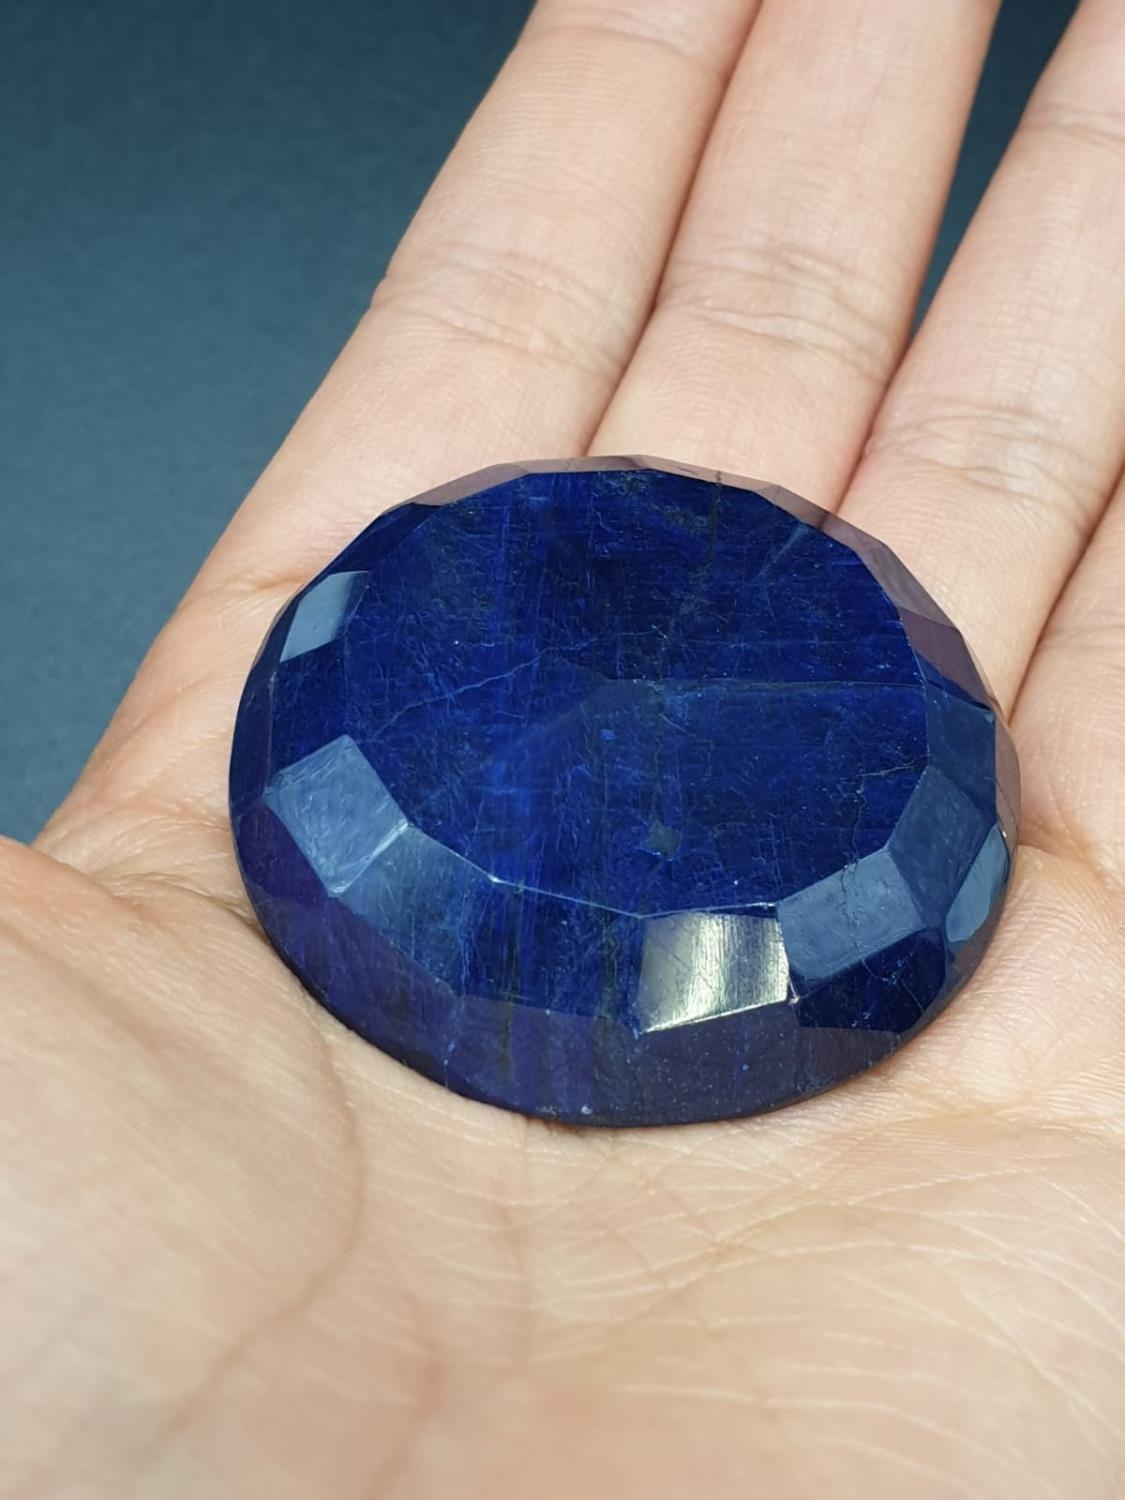 273.56 Ct Natural Blue Sapphire. Round brilliant cut. IGL&I certified - Image 5 of 5